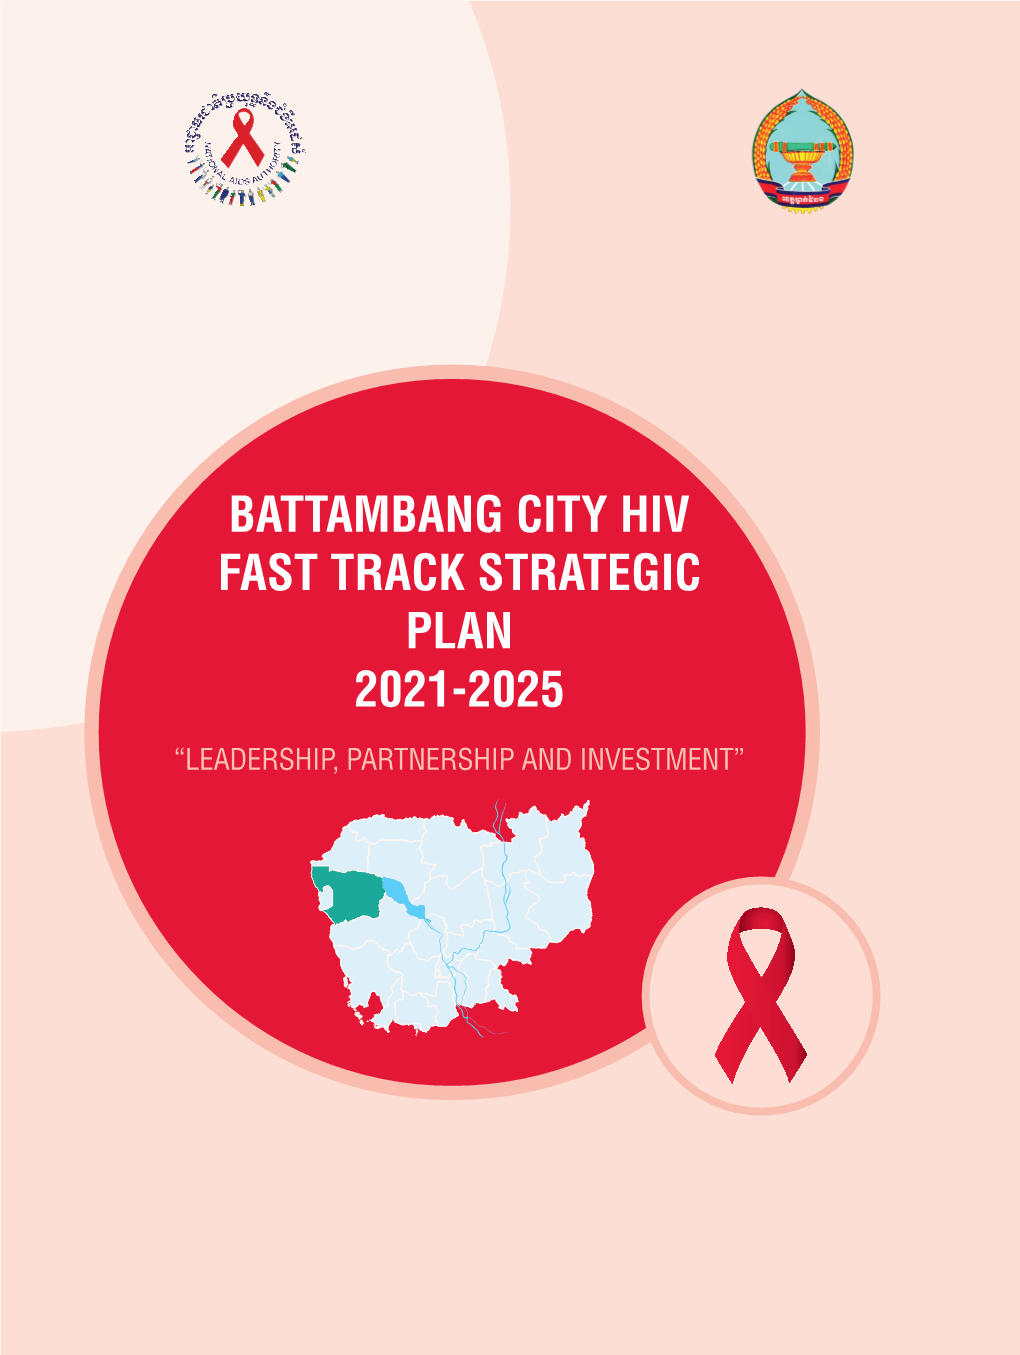 Battambang City Hiv Fast Track Strategic Plan 2021-2025